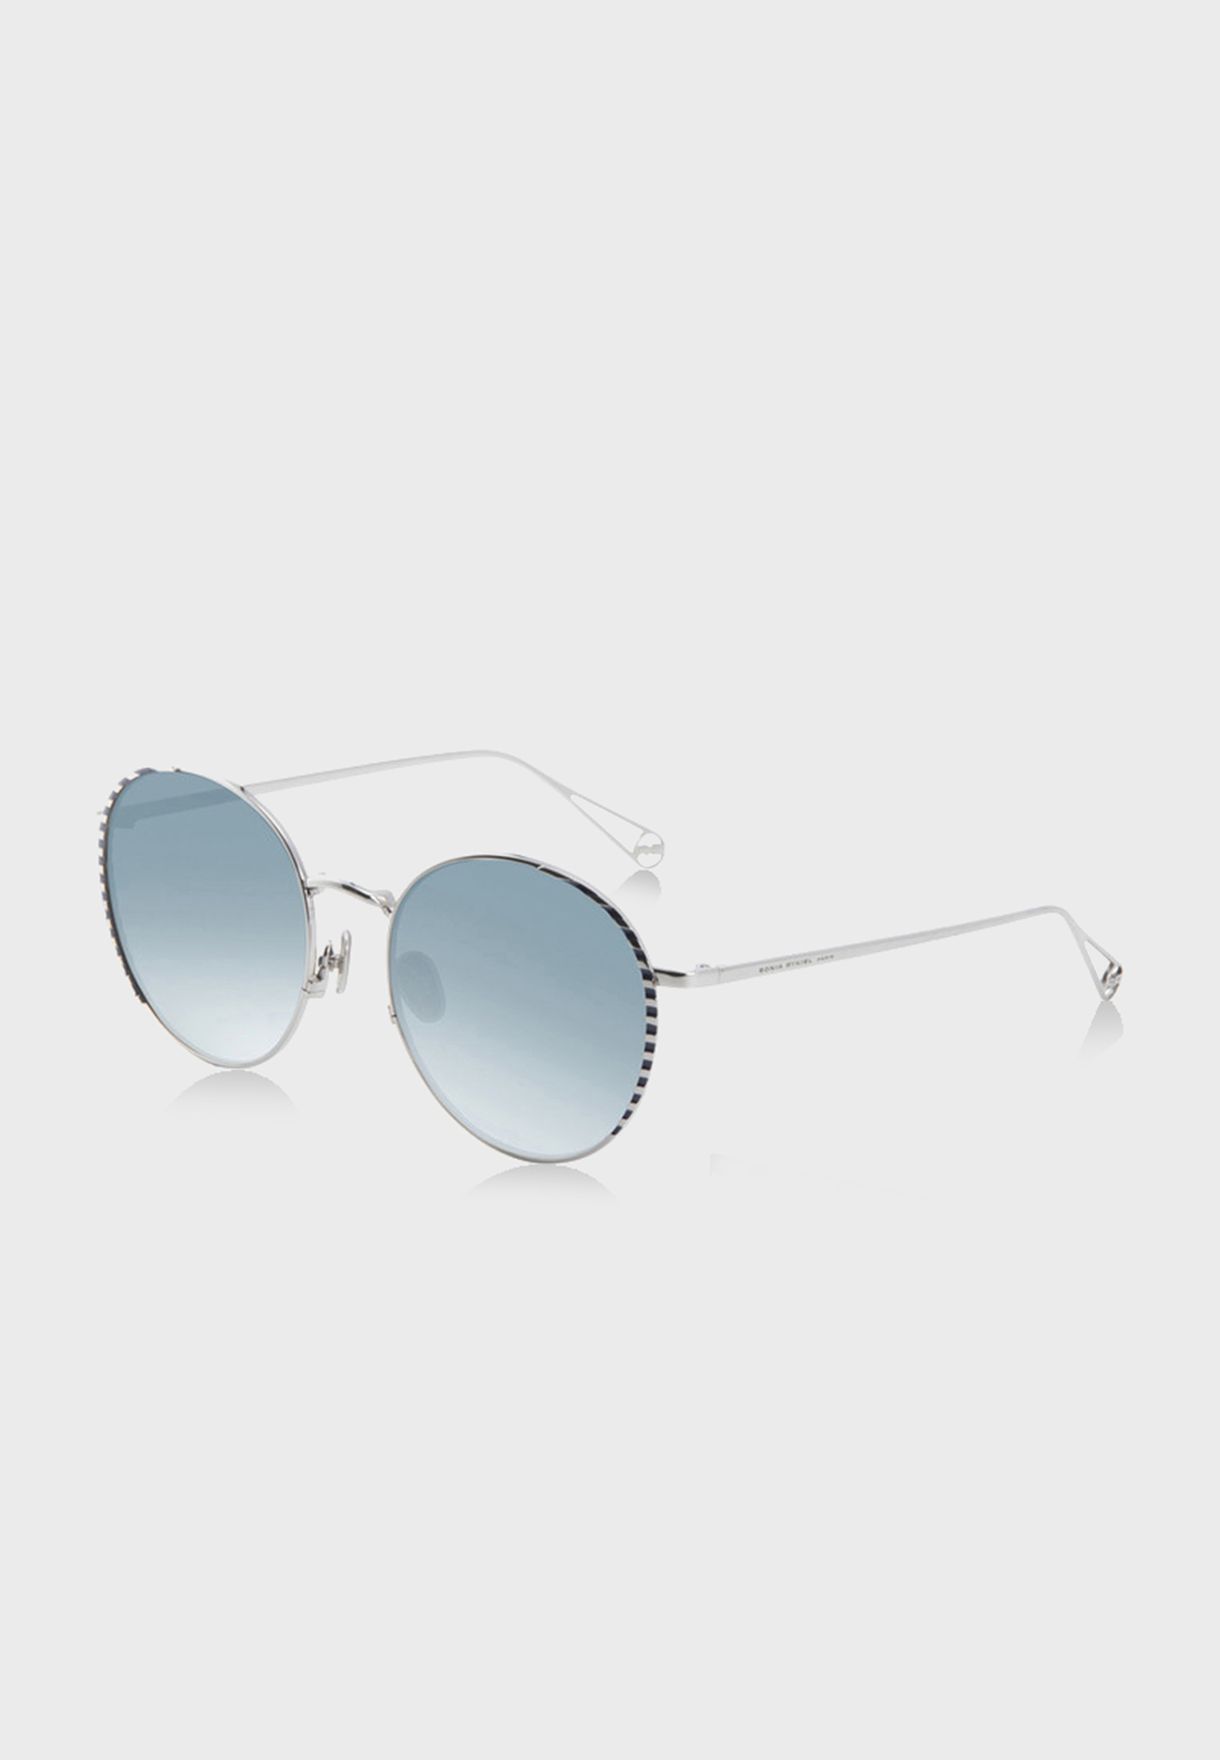 L SR778703 Oversized Sunglasses